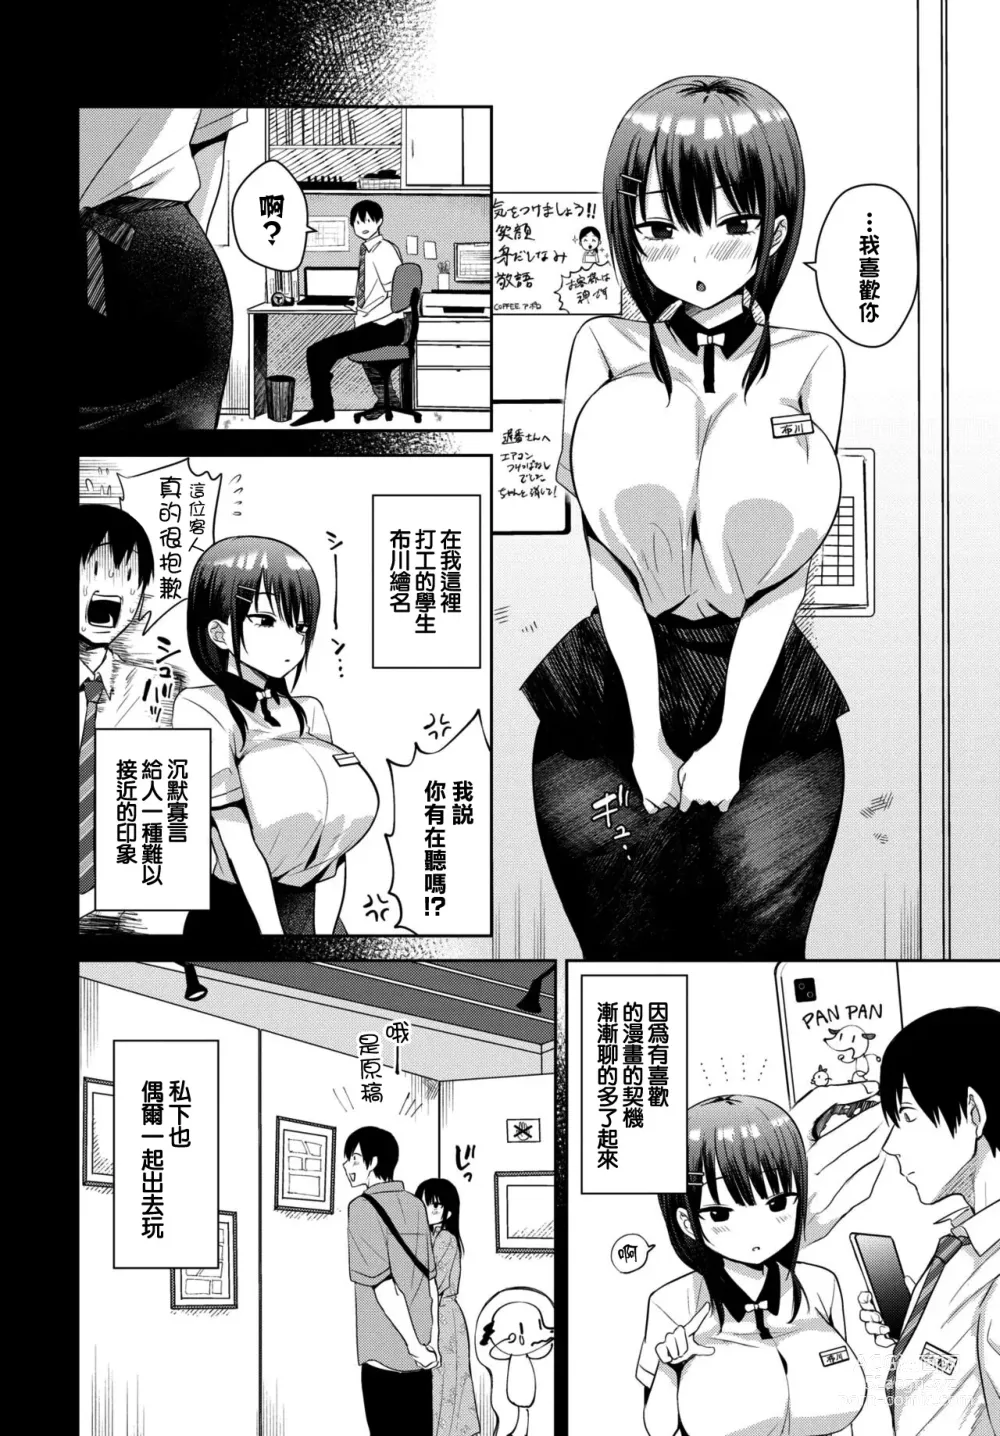 Page 2 of manga Furaretori